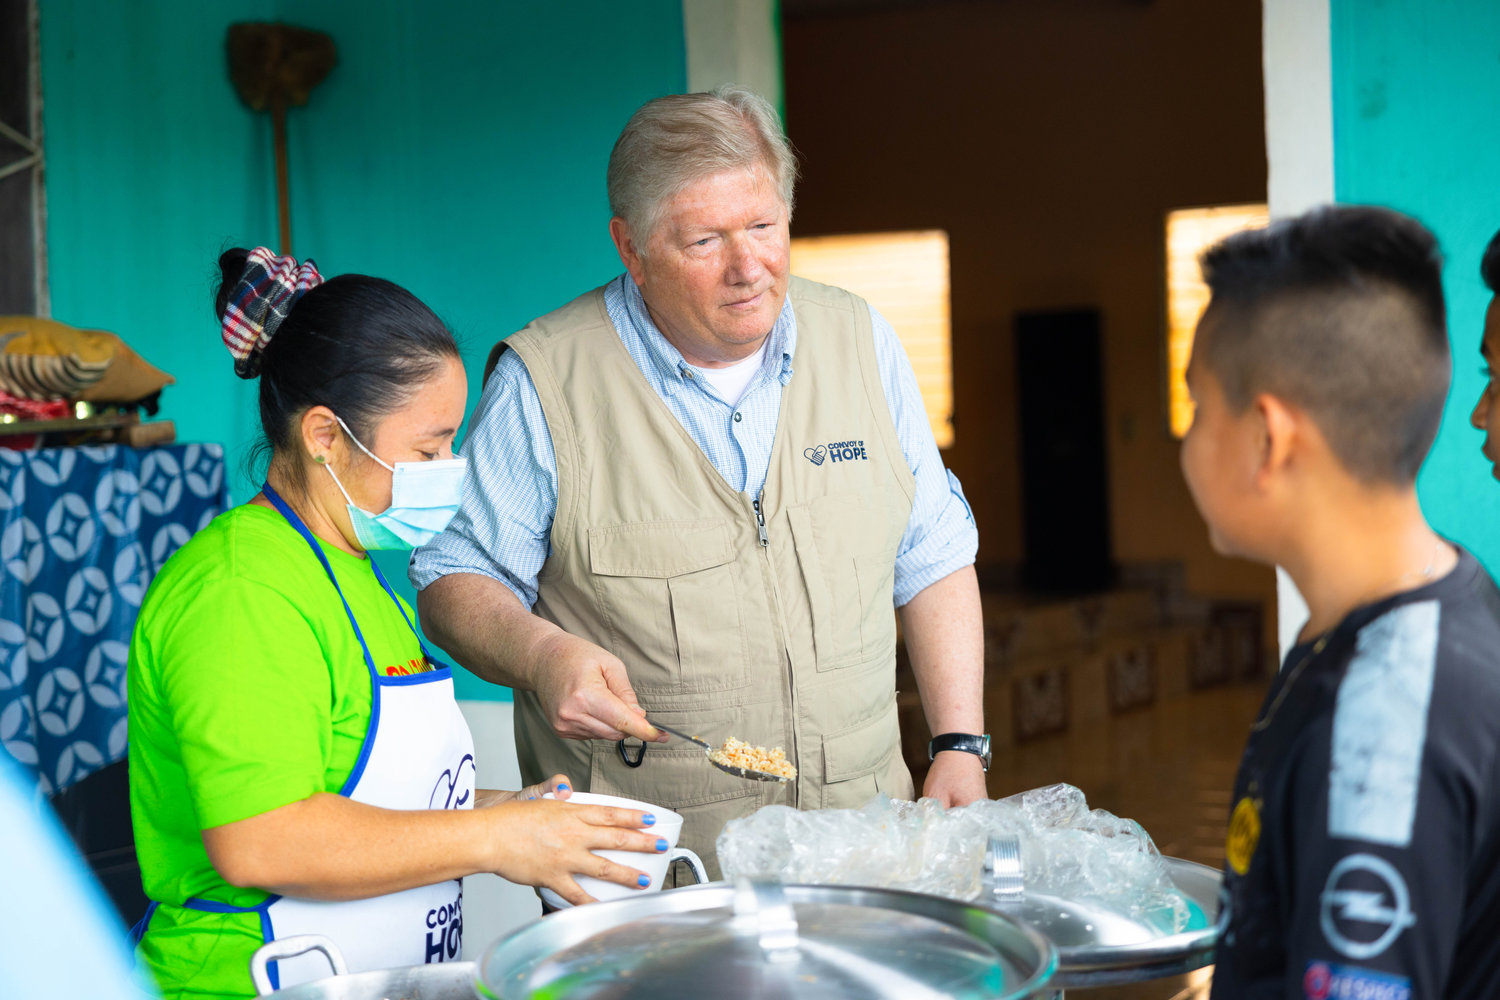 In El Salvador, he helps serve lunch at a Convoy program center.